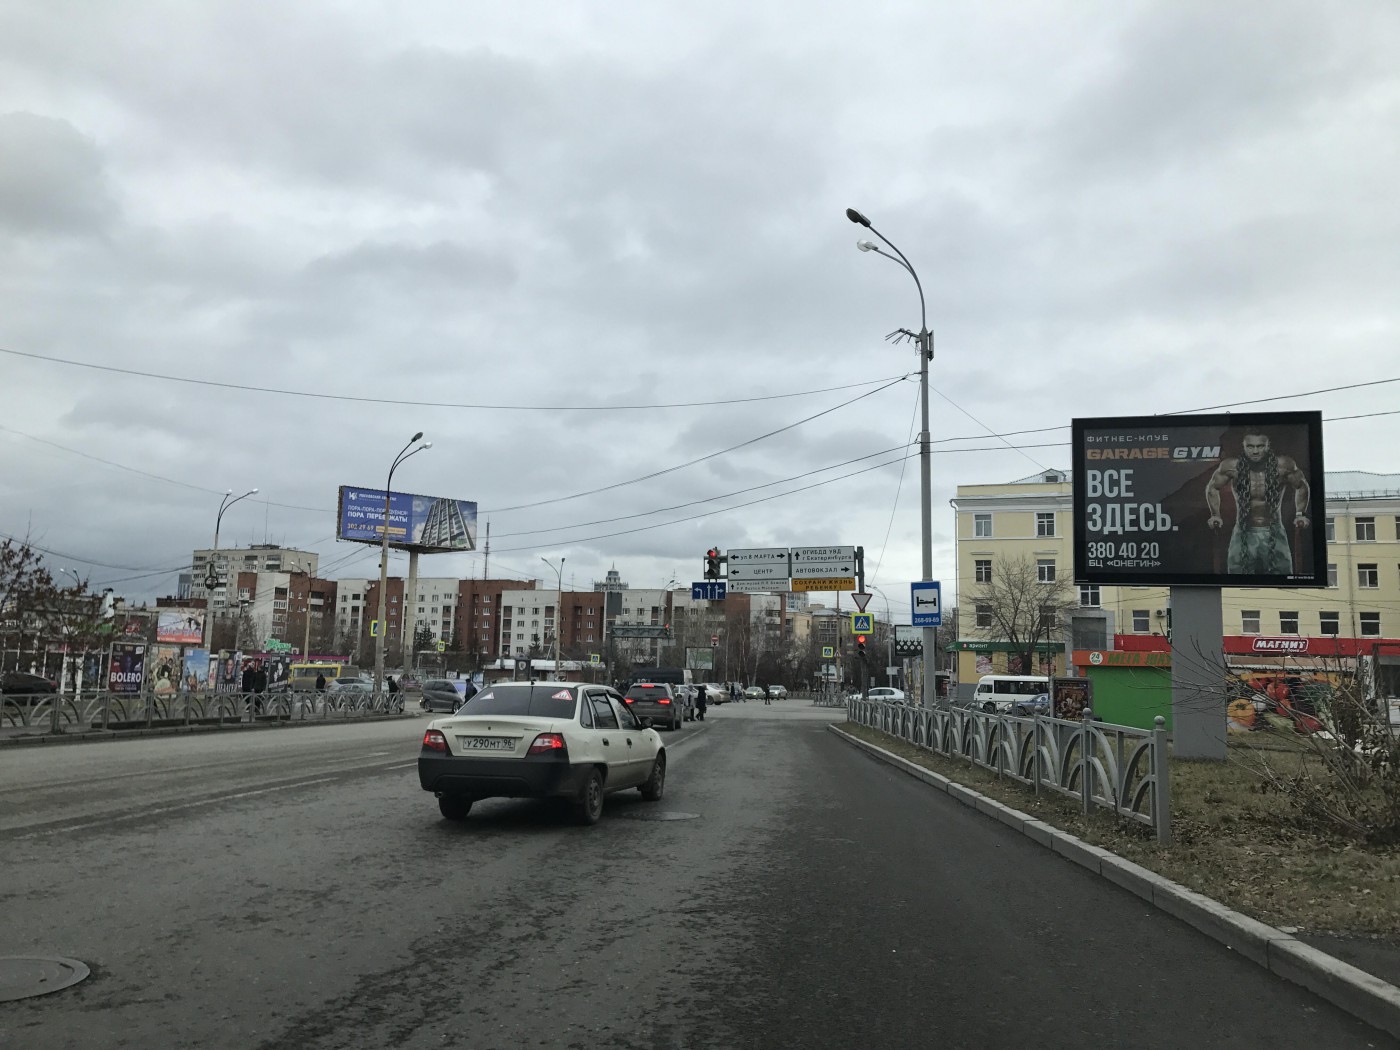 Реклама фитнес-клуба GARAGE GYM на билборде. Екатеринбург, ул. Большакова — 8 Марта